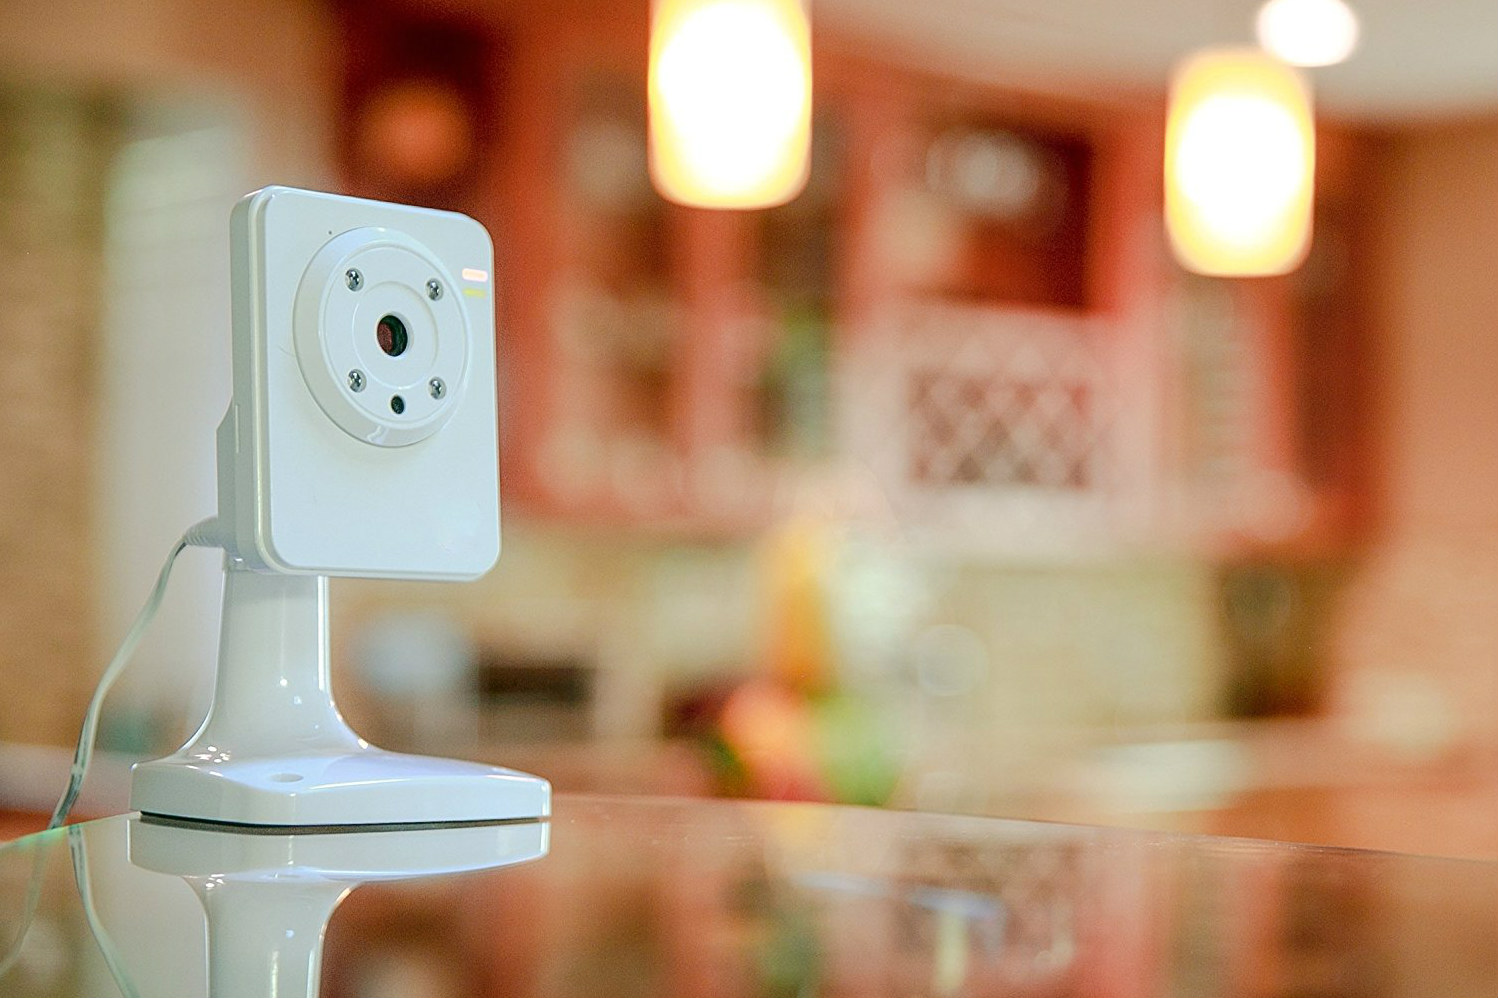 Introducing Roku Smart Home lights, video doorbells, plugs, and cameras